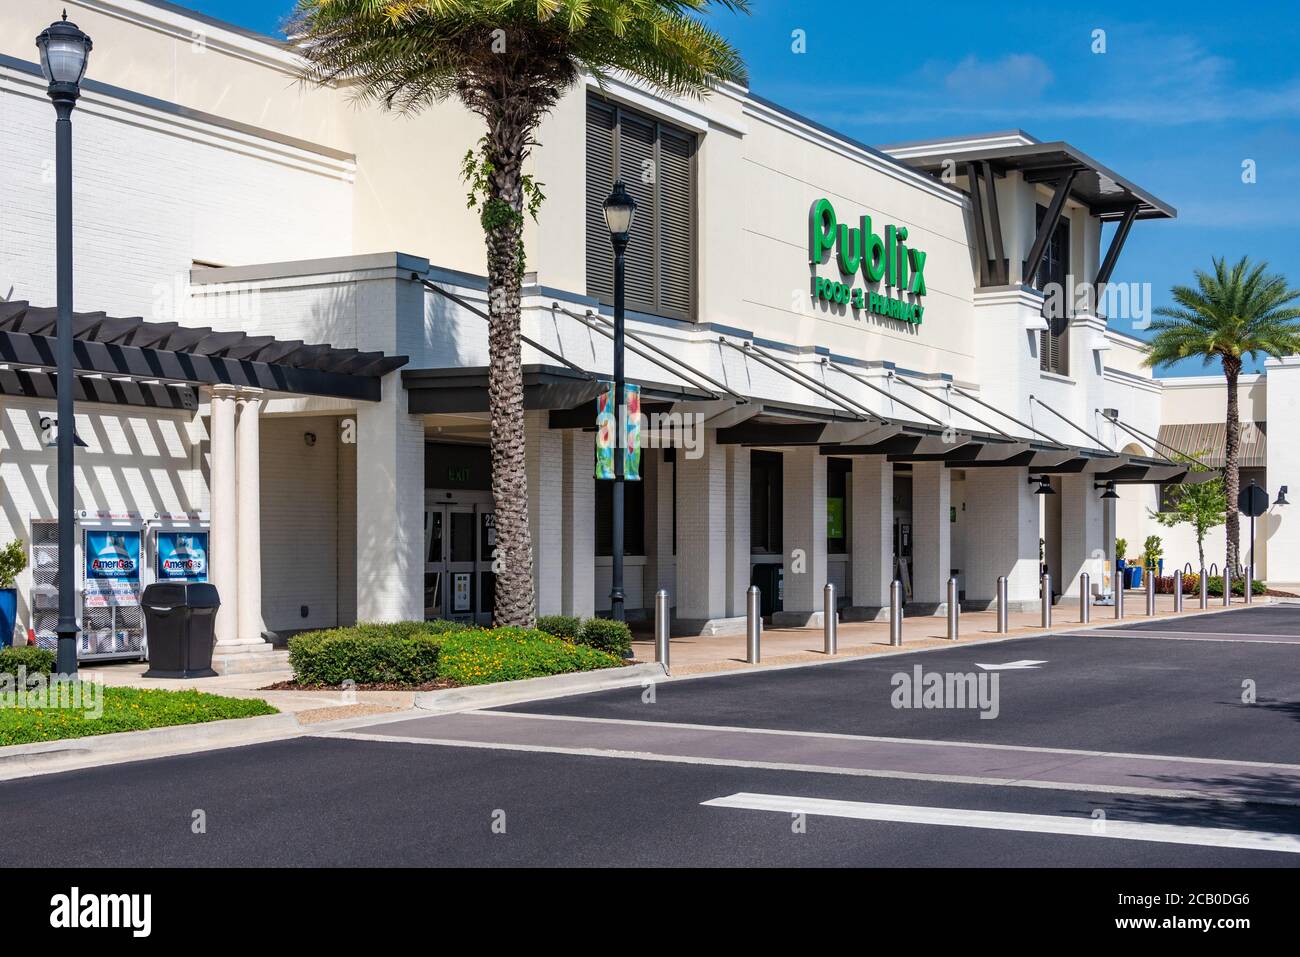 Publix Food & Pharmacy supermarket at Sawgrass Village in Ponte Vedra Beach, Florida. (USA) Stock Photo